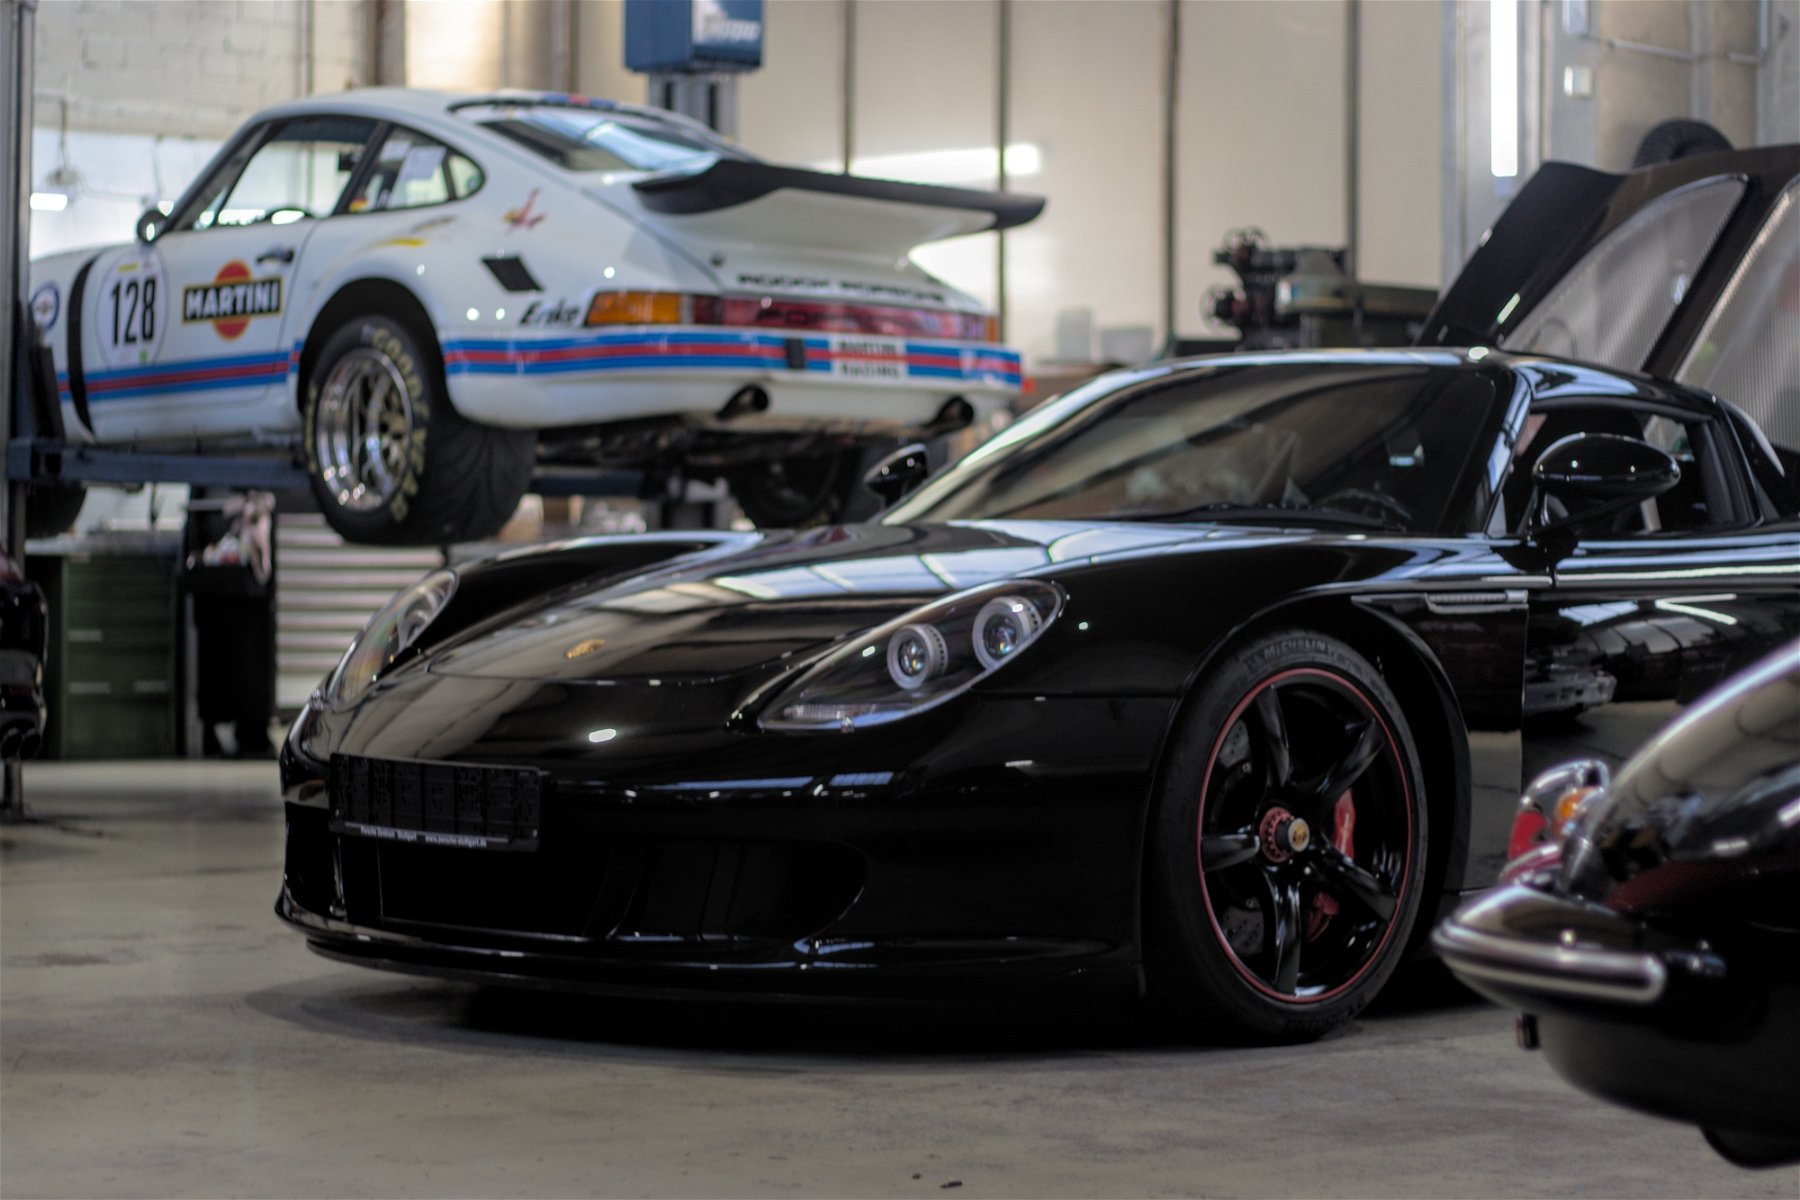 Porsche Carrera GT restored and personalized by Porsche - Autoblog